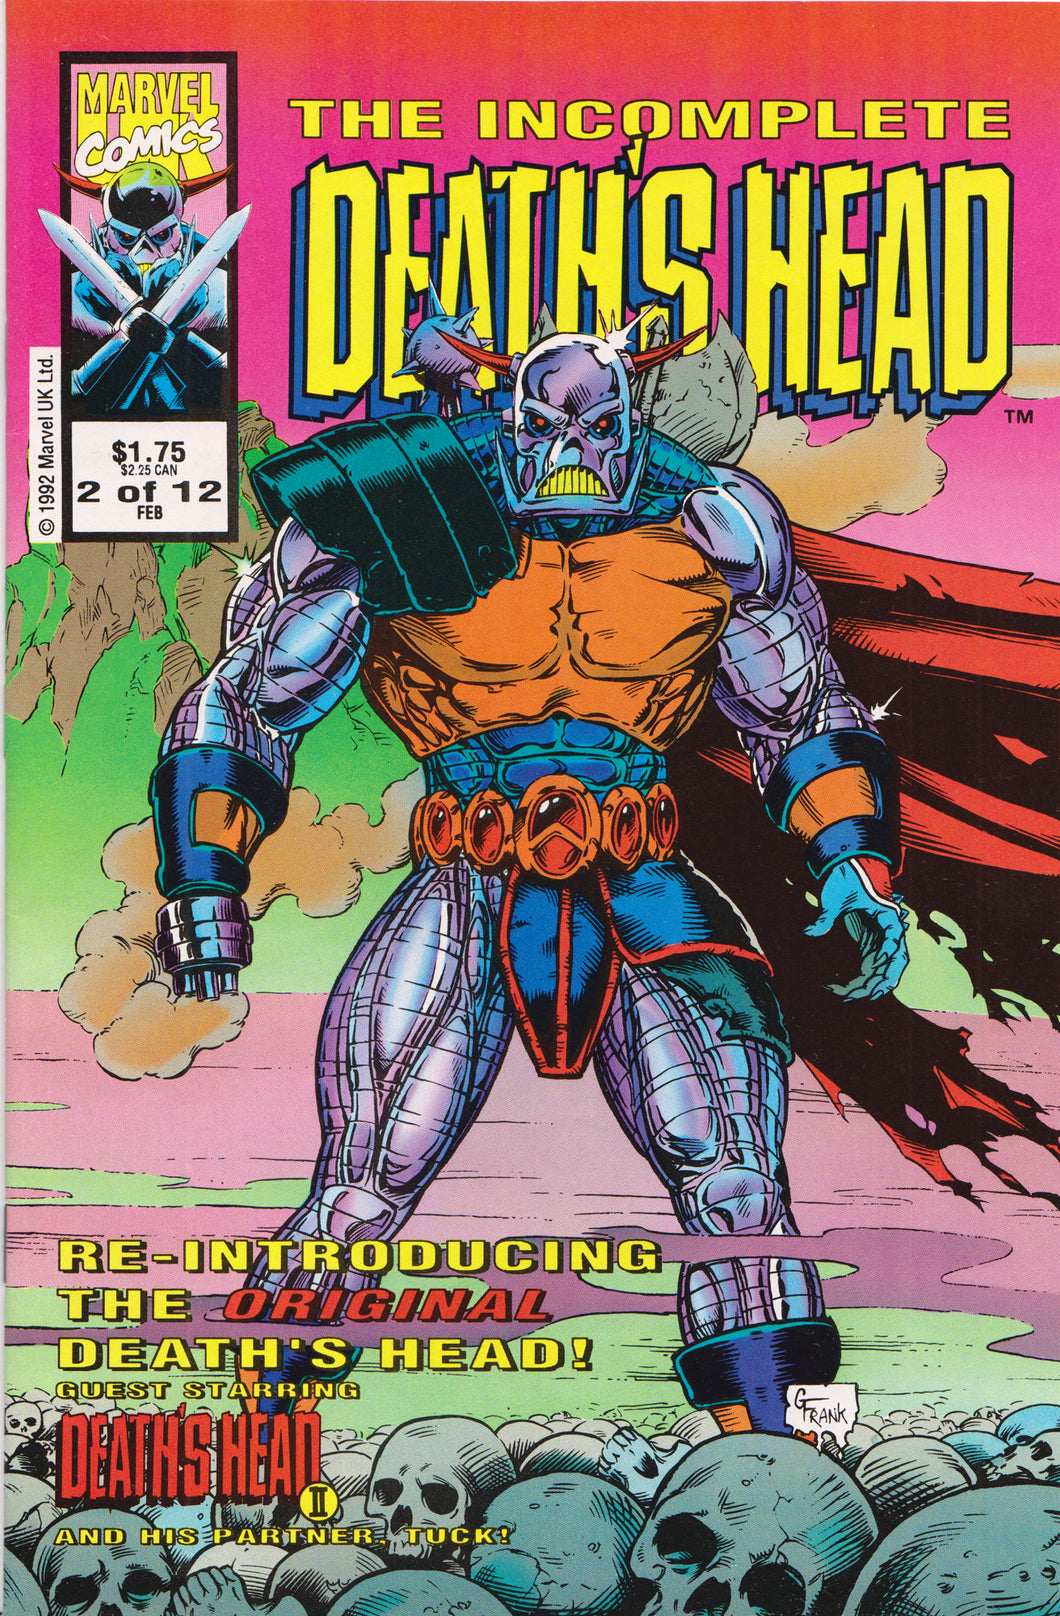 INCOMPLETE DEATH'S HEAD  #2 COMIC BOOK ~ Marvel Comics